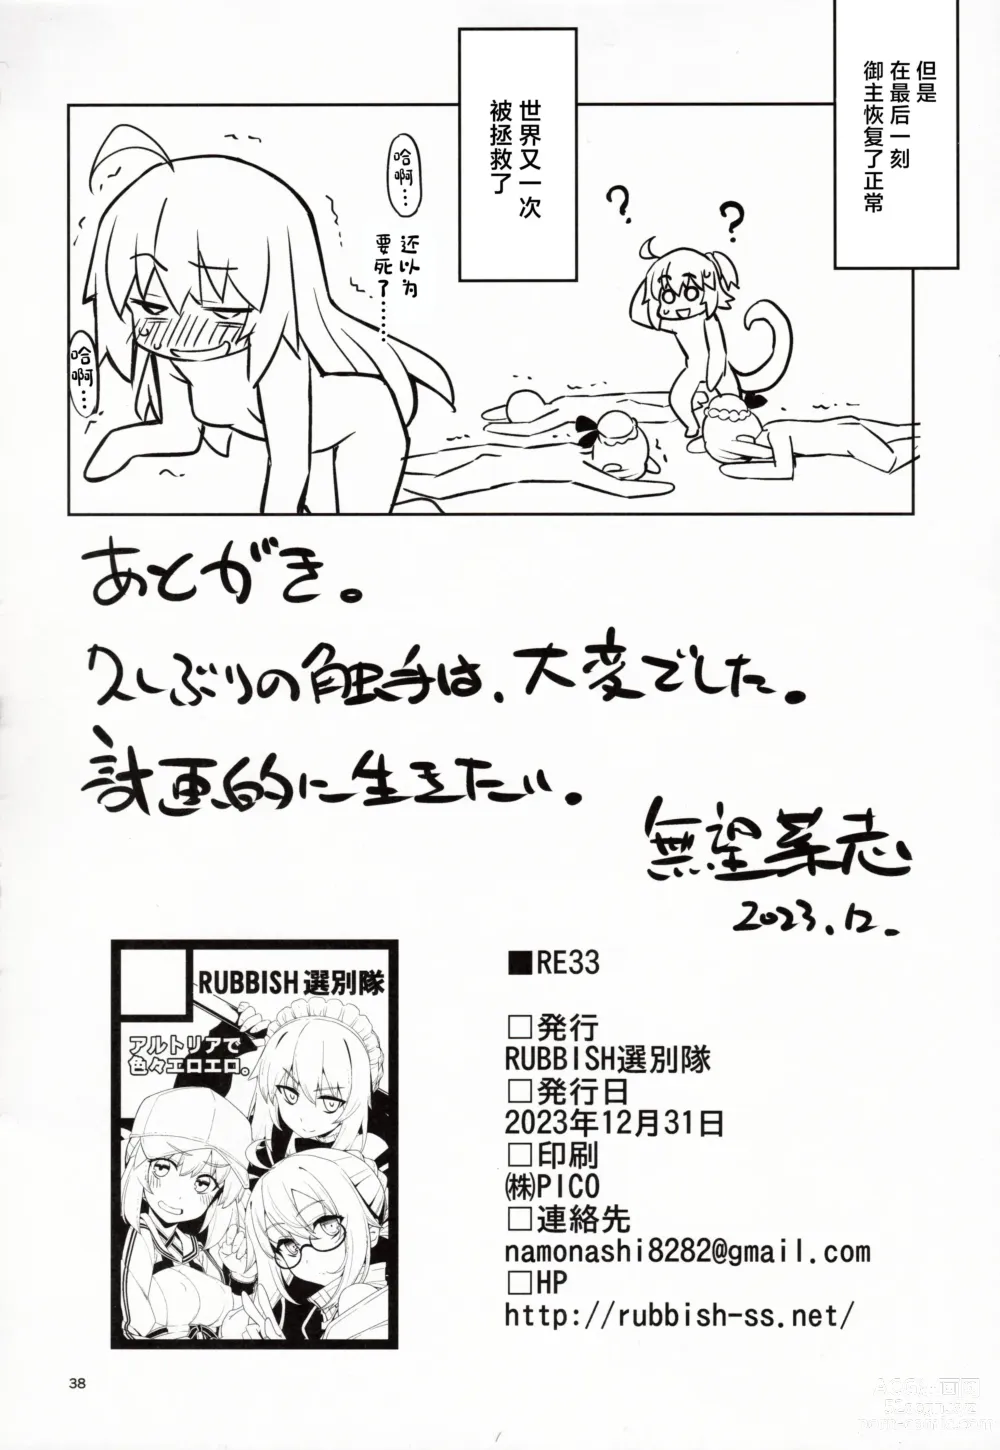 Page 37 of doujinshi RE33